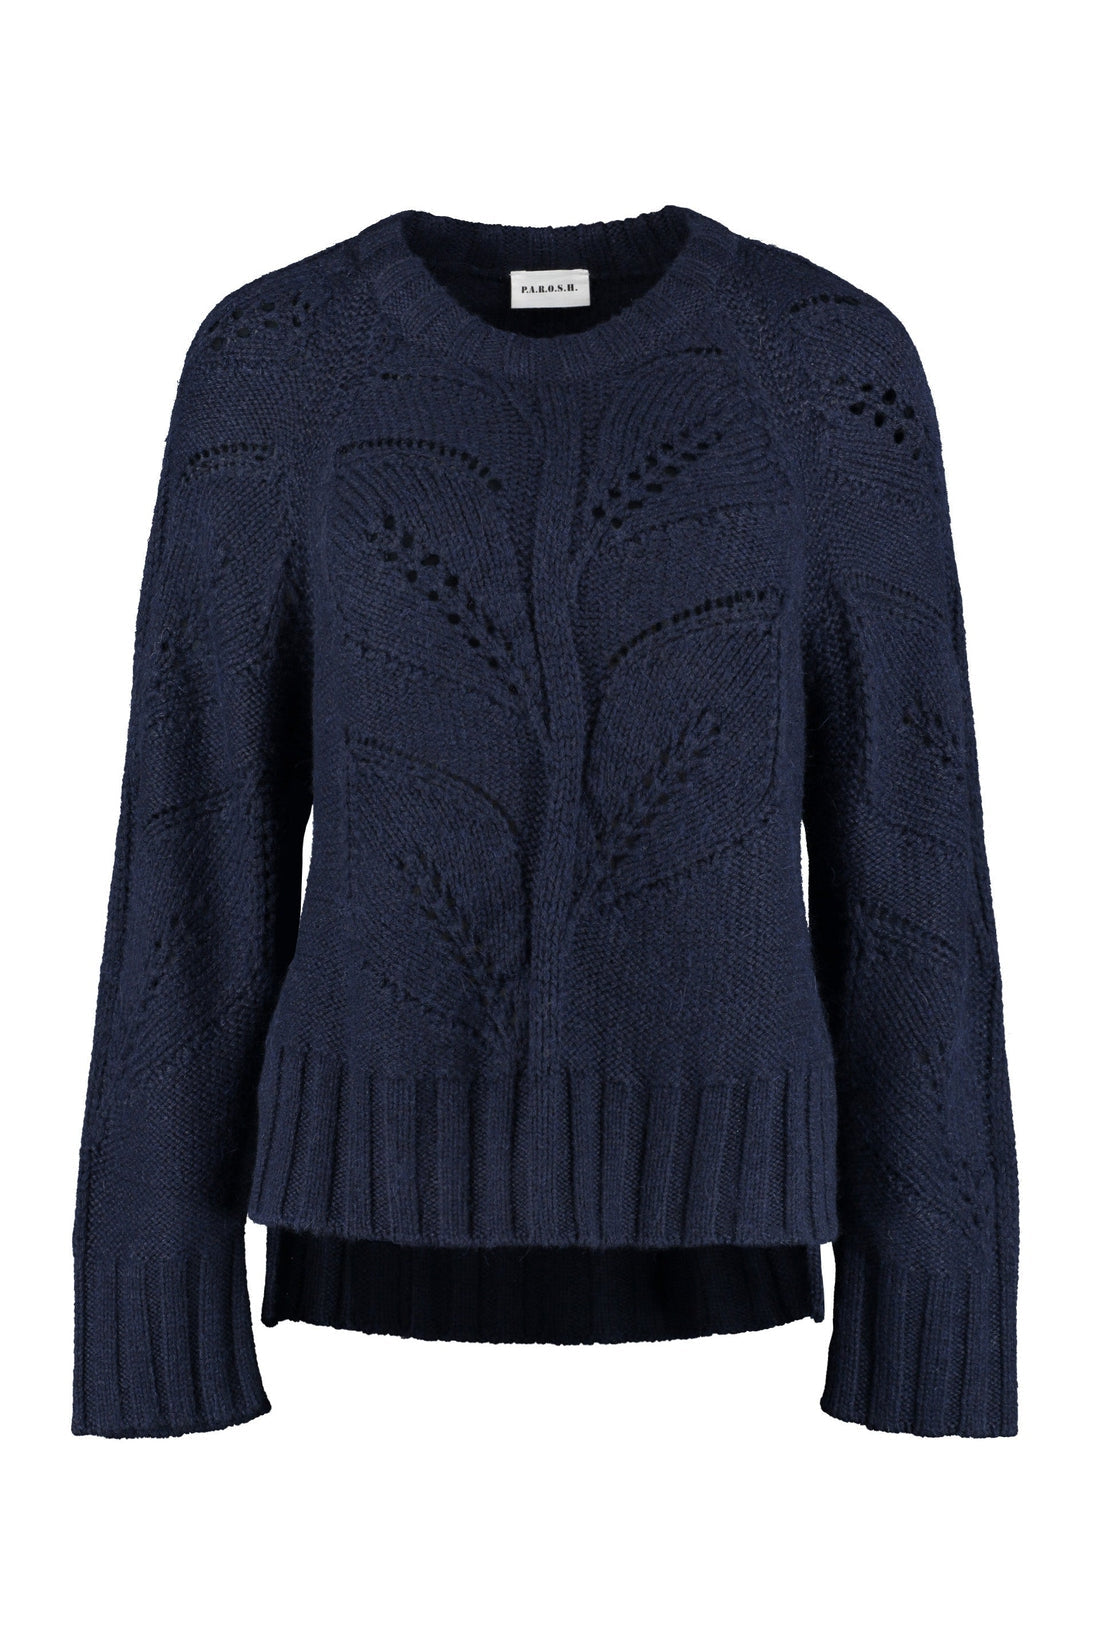 Parosh-OUTLET-SALE-Leaf wool-blend crew-neck sweater-ARCHIVIST